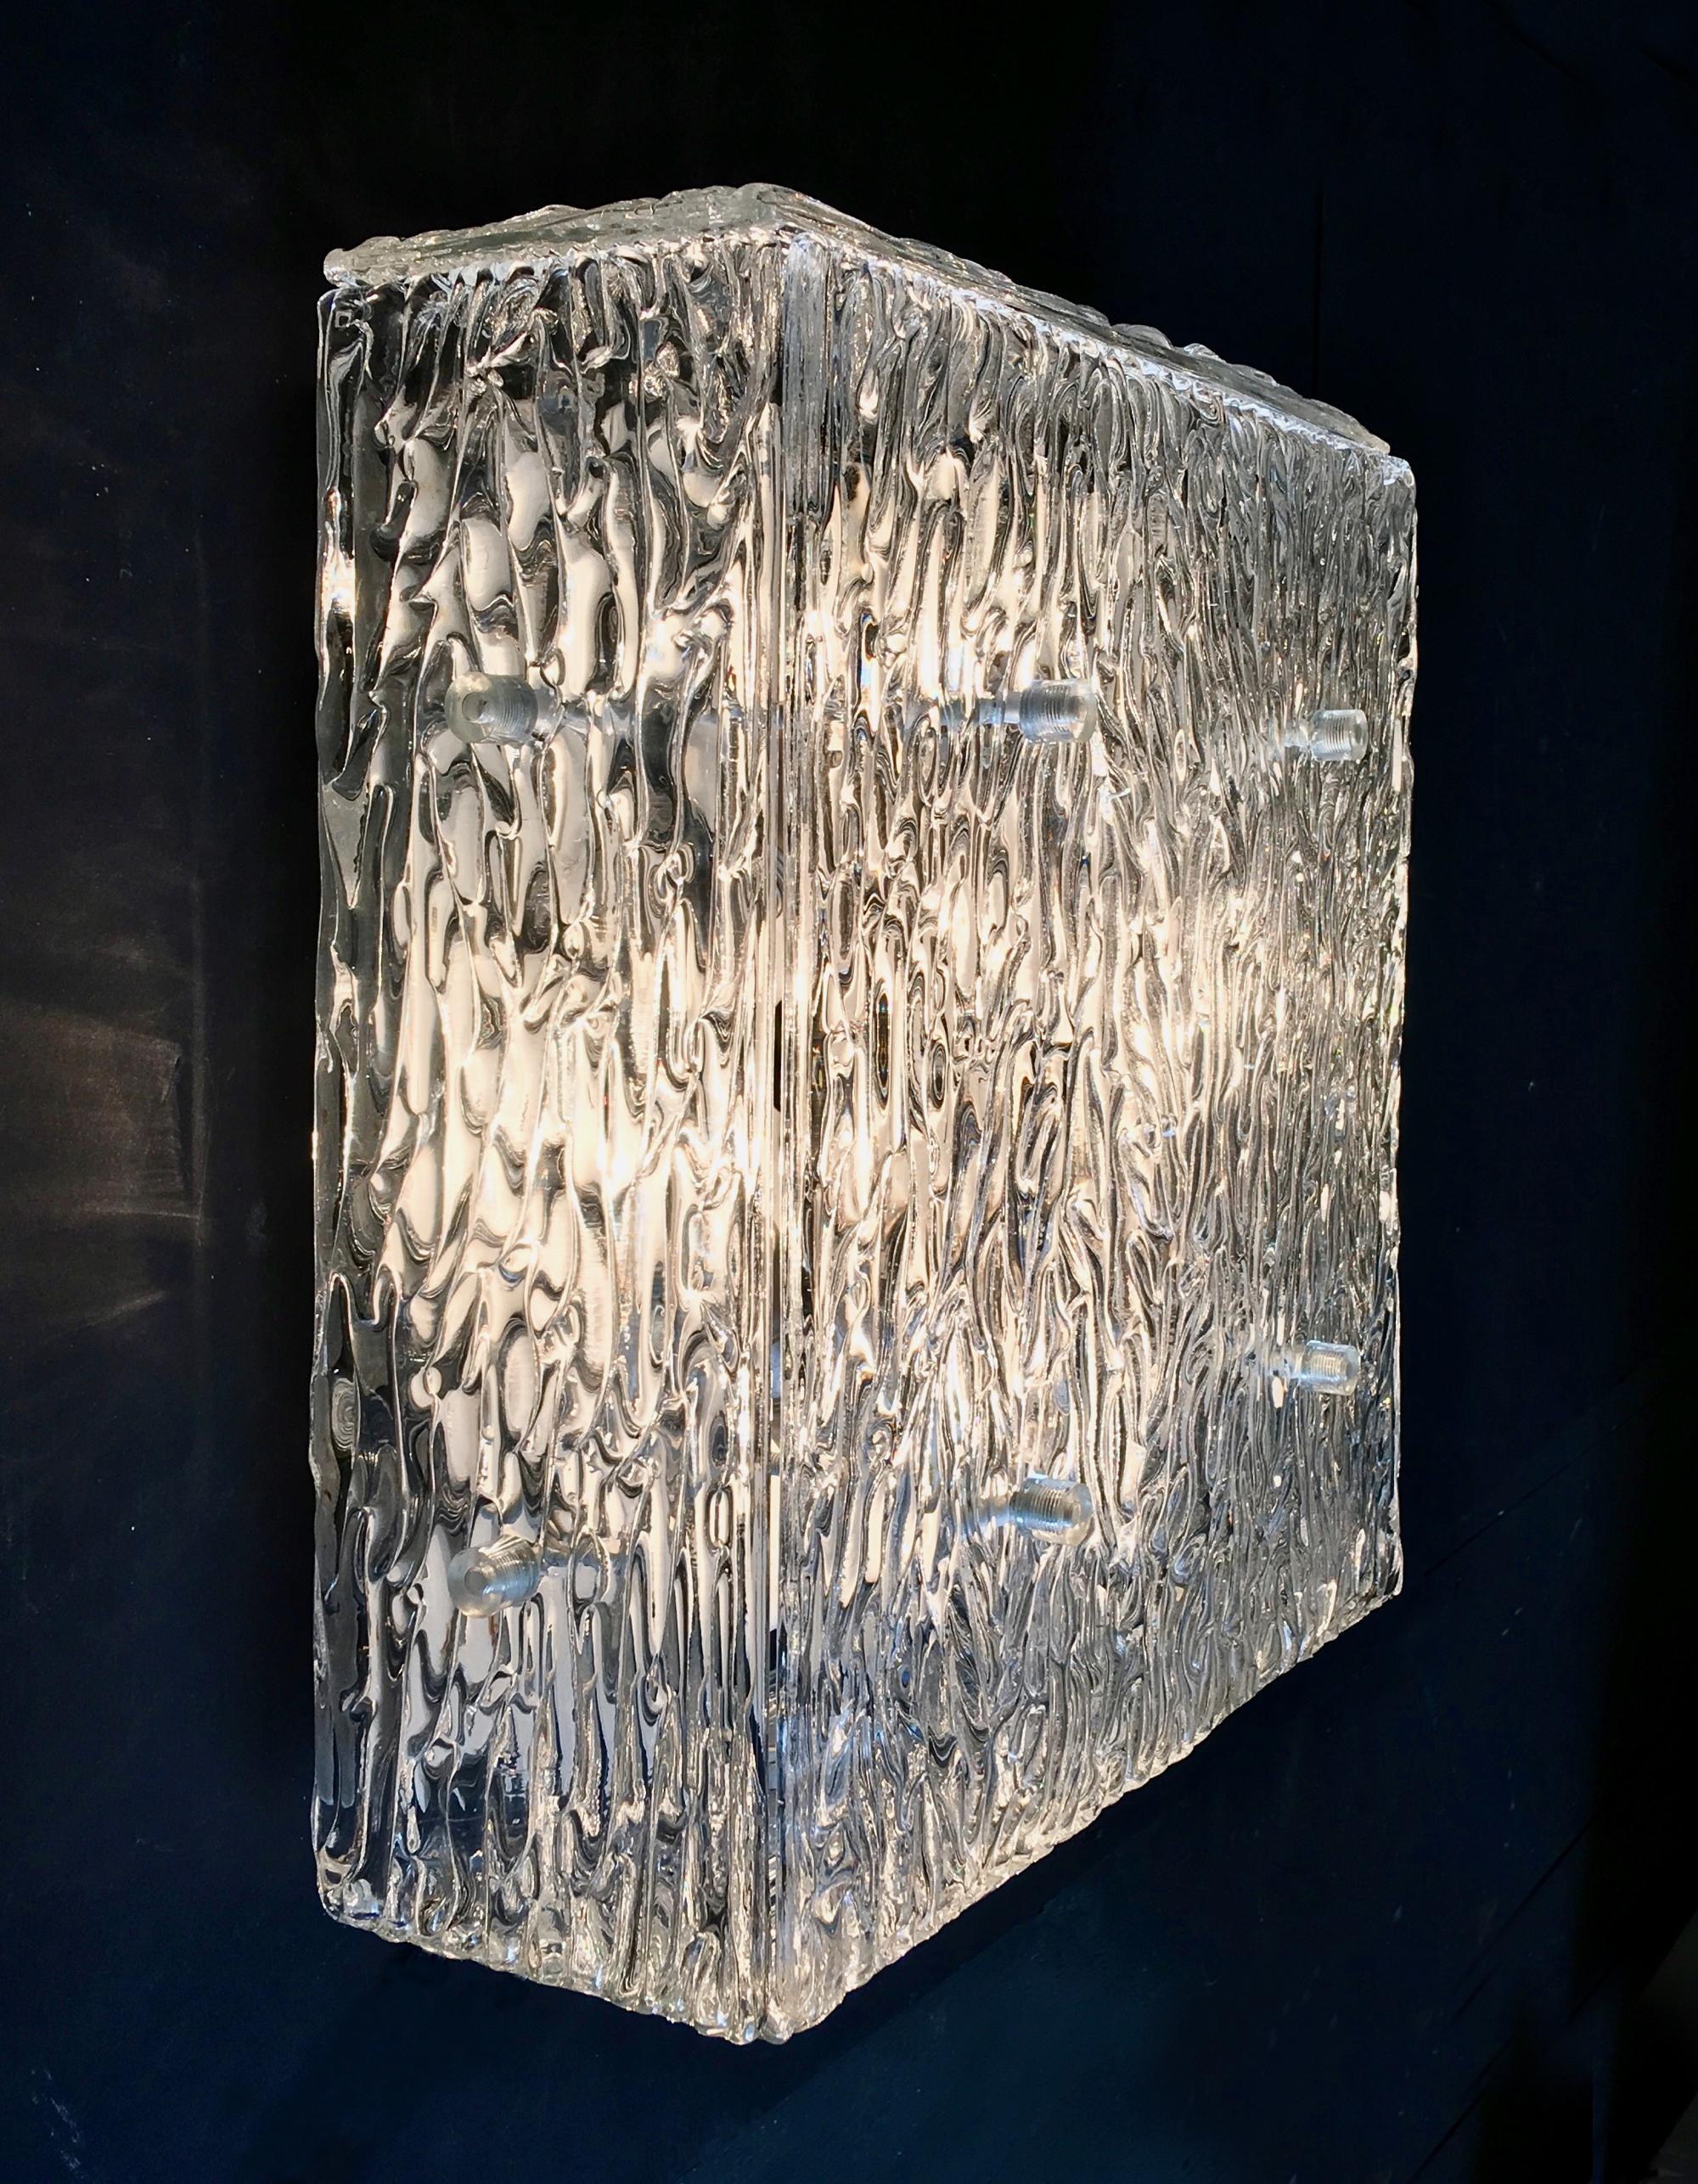 Austrian Midcentury Square Flushmount of Clear Dispersion Glass Light by Kalmar Austria